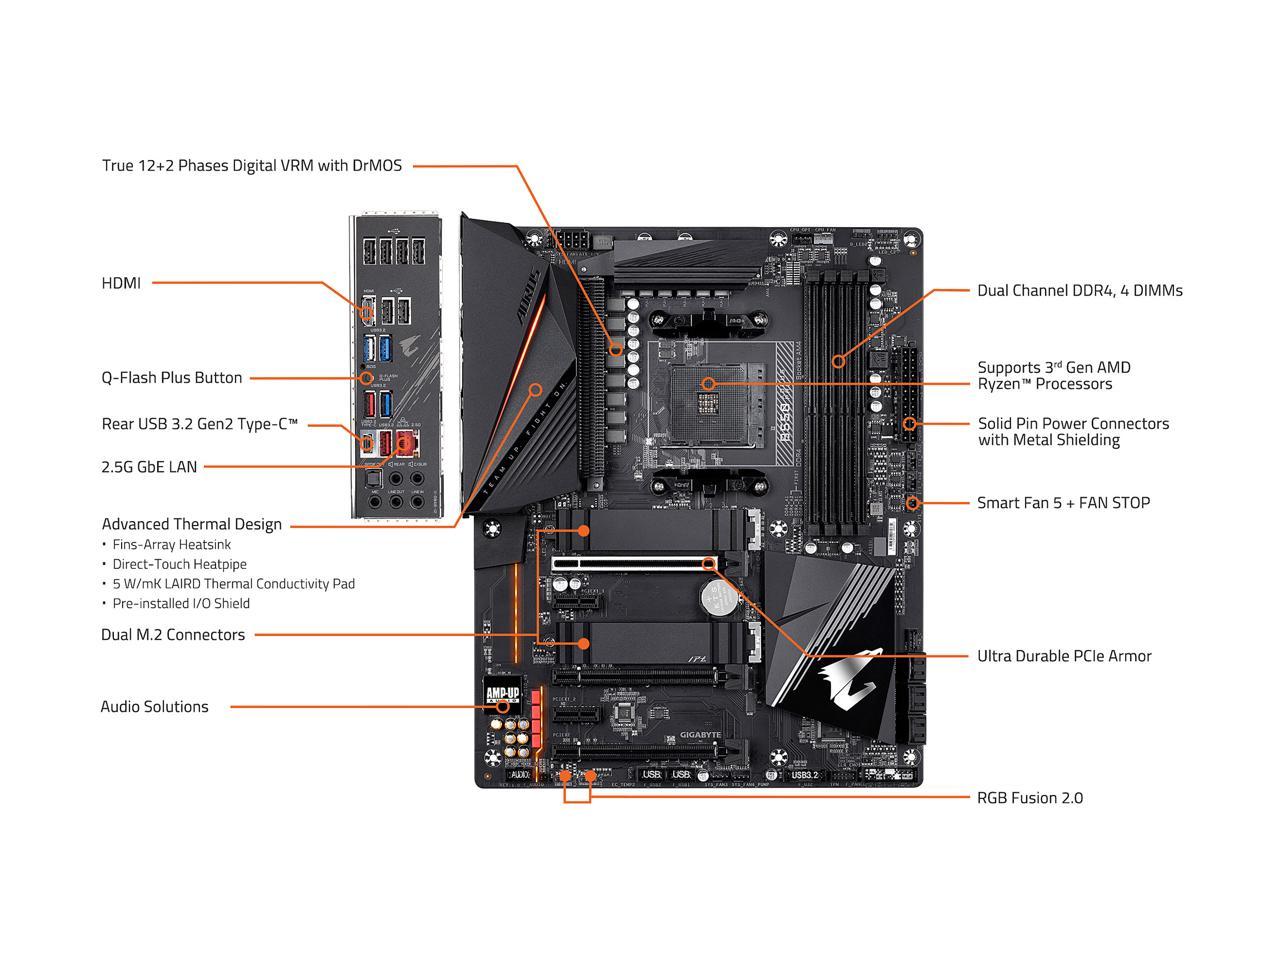 GIGABYTE B550 AORUS PRO AM4 AMD B550 ATX Motherboard with Dual M.2, SATA 6Gb/s, USB 3.2 Gen 2, 2.5 GbE LAN, PCIe 4.0